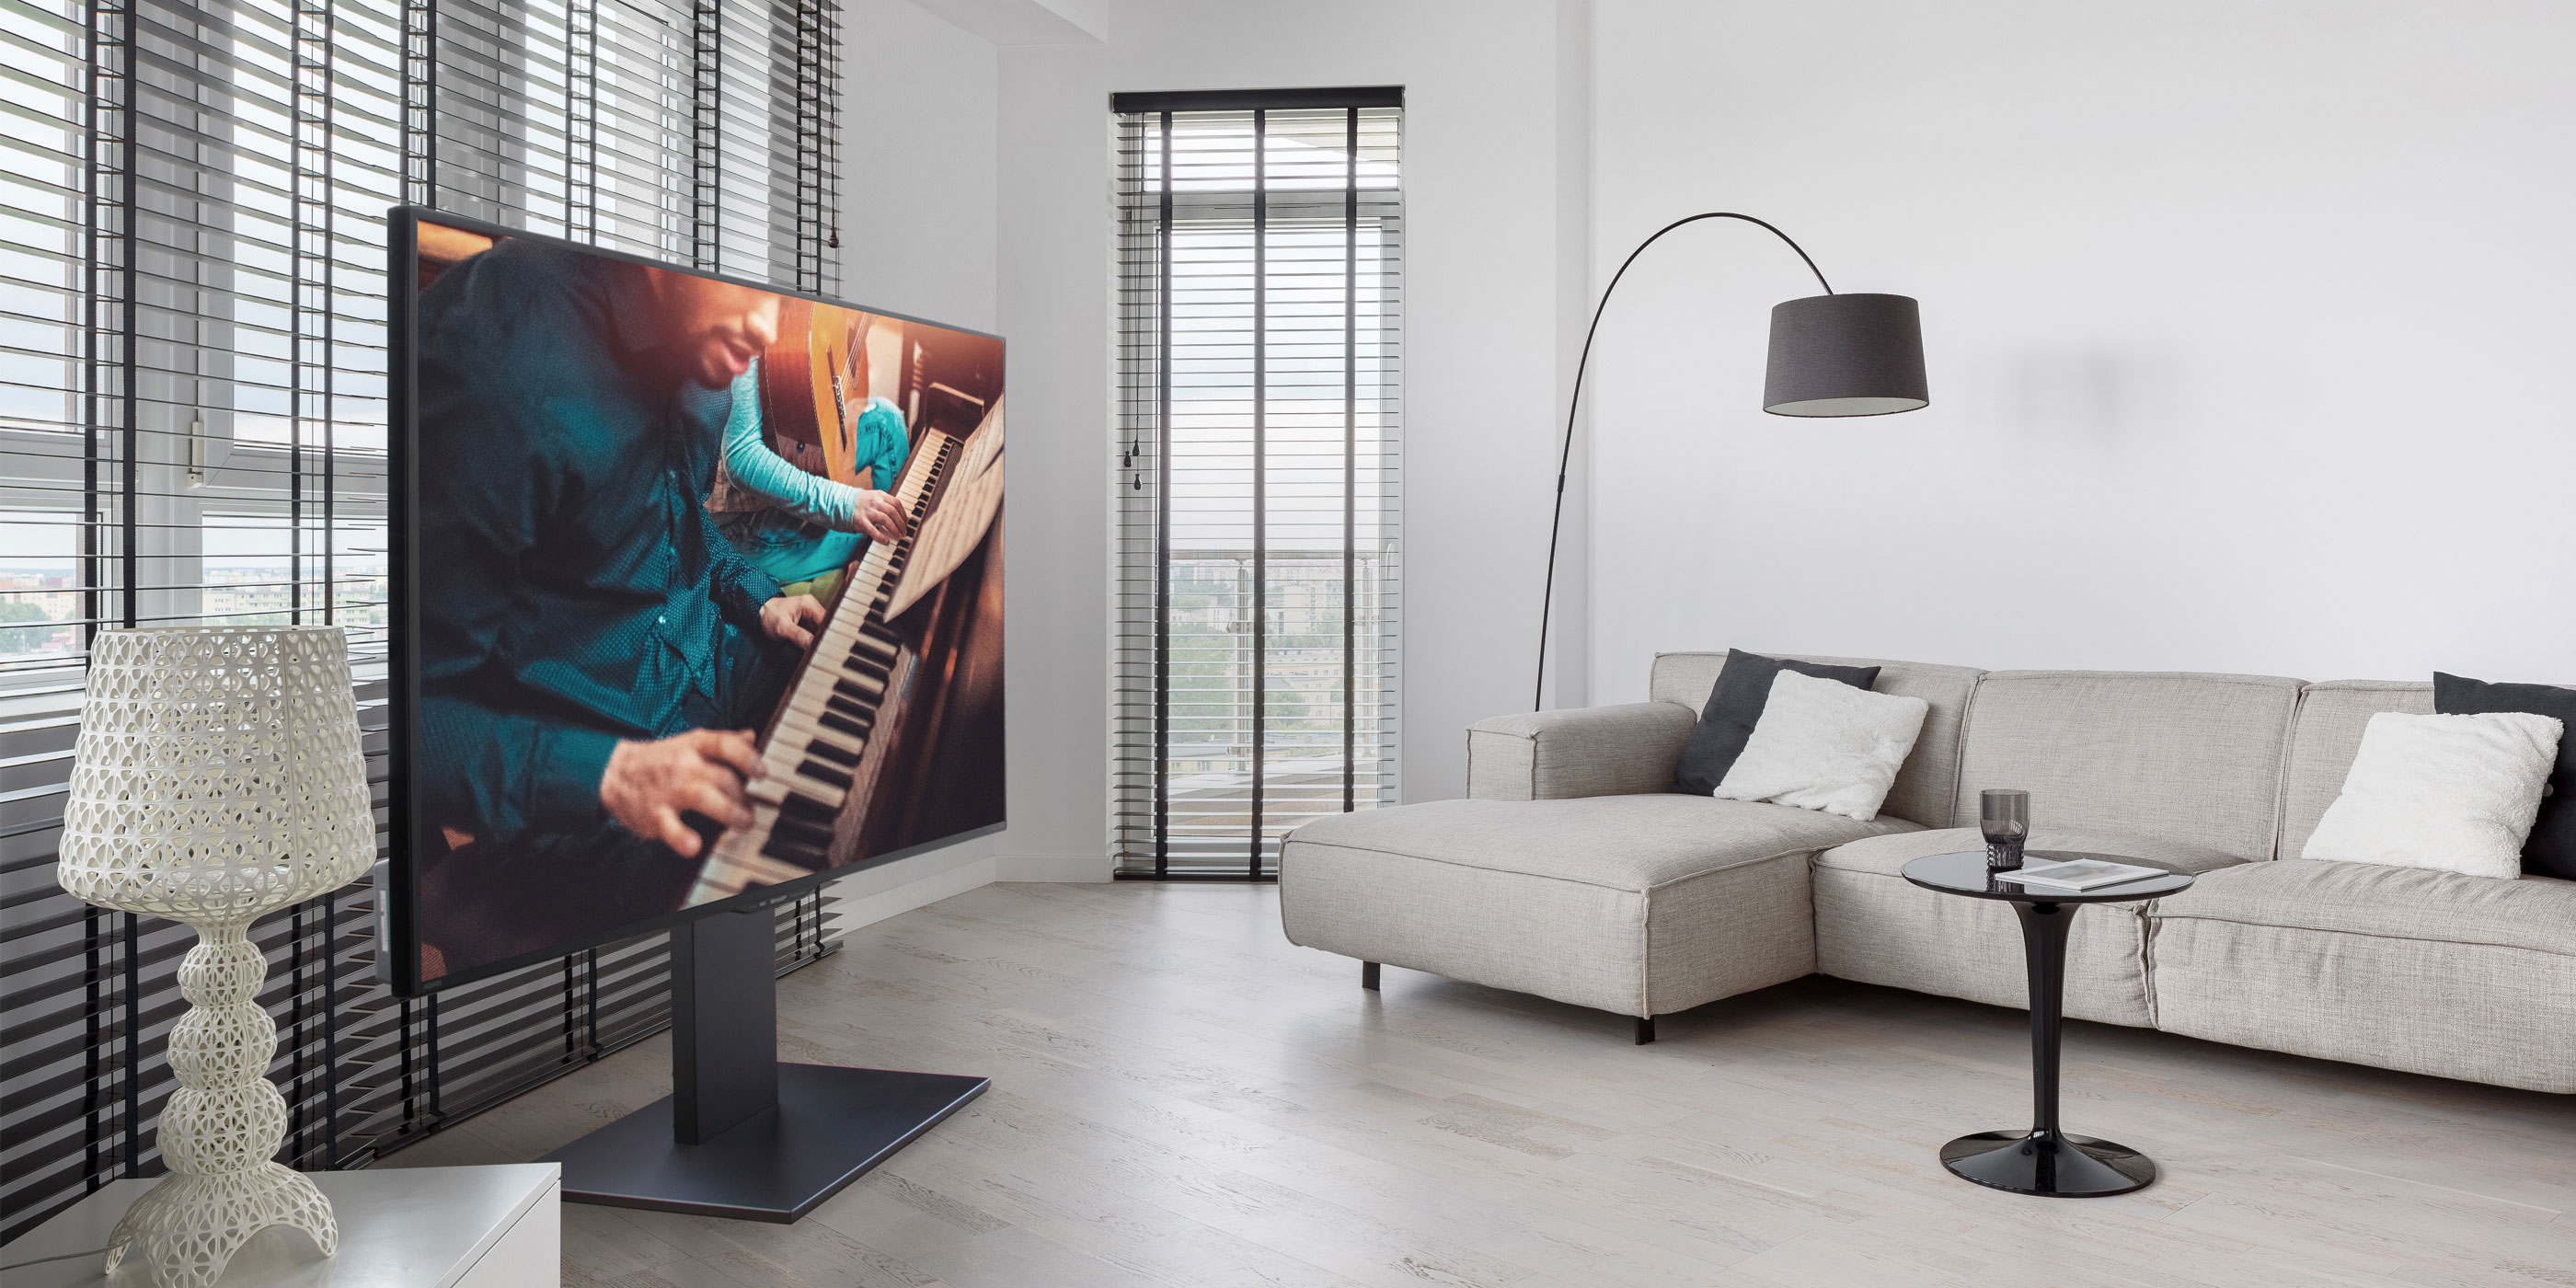 WALL INTERIOR TV STAND S1 自立型テレビスタンド